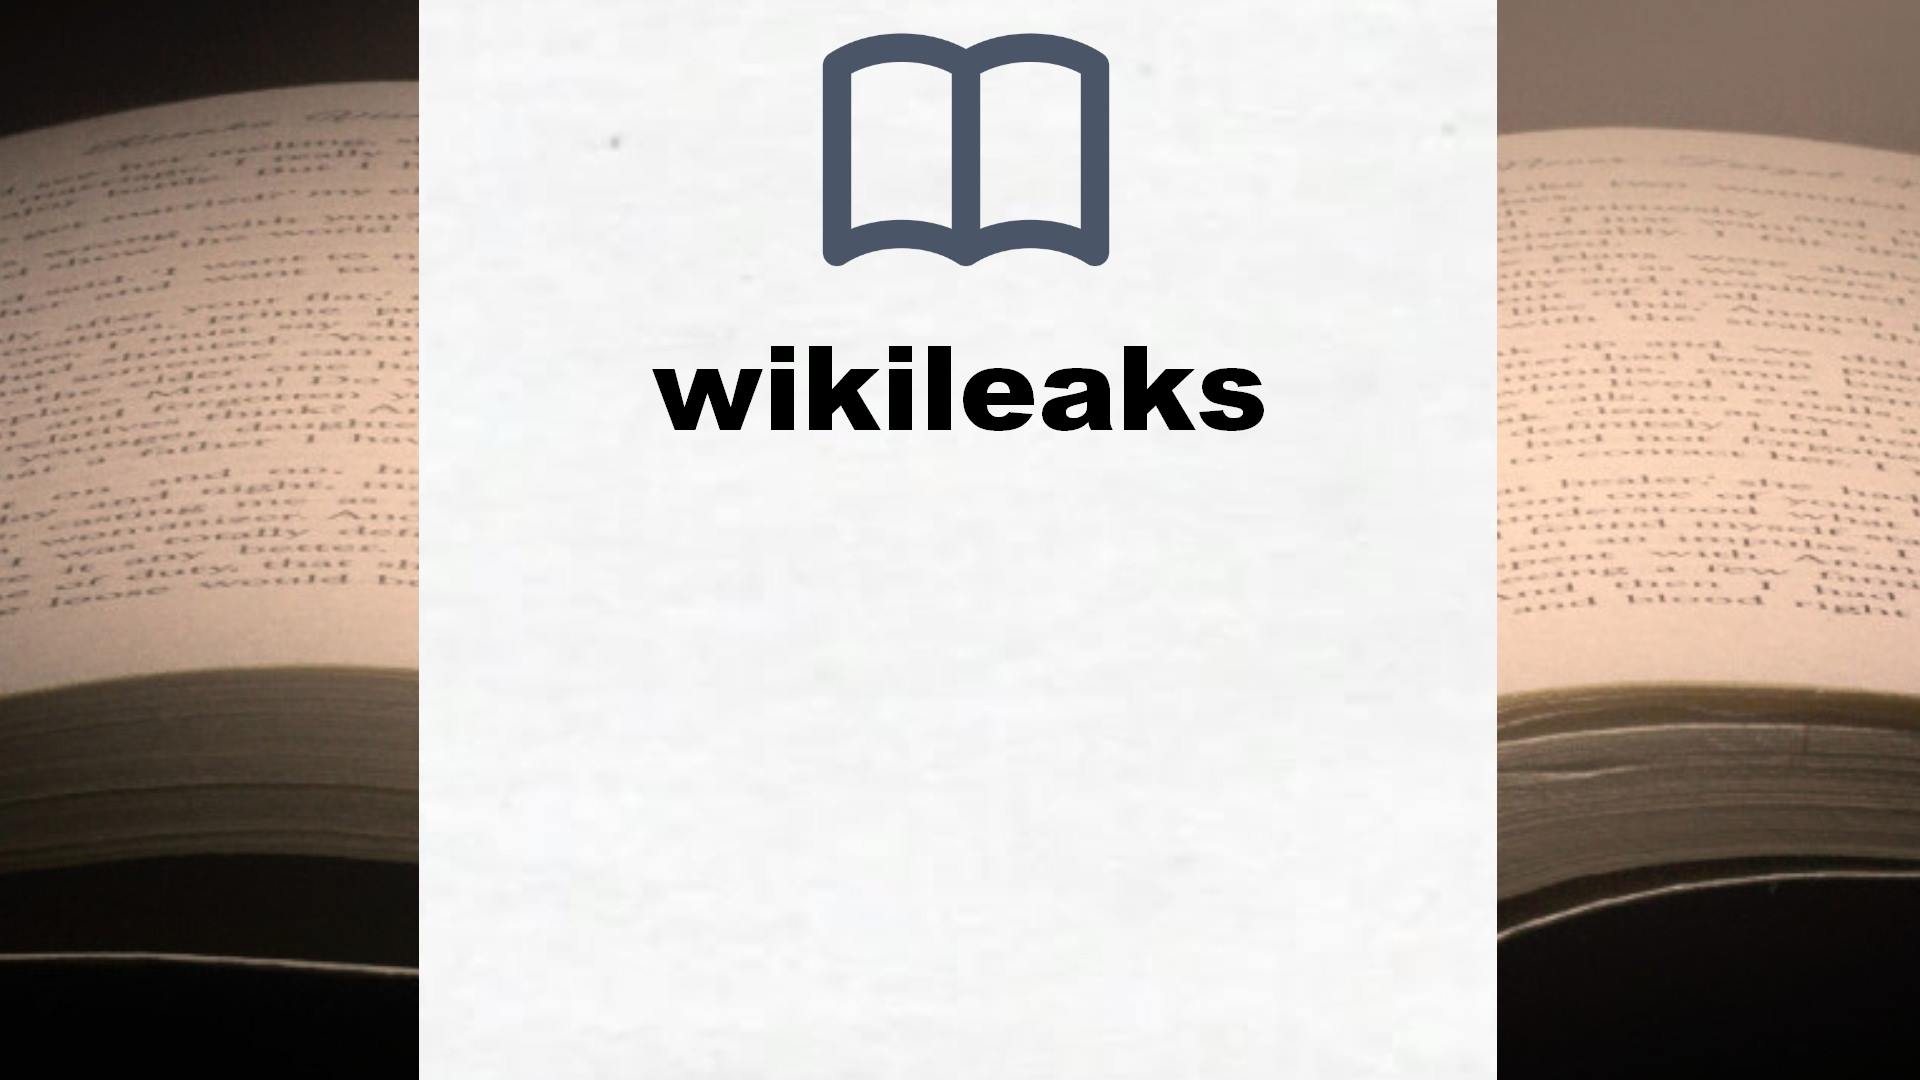 Libros sobre wikileaks